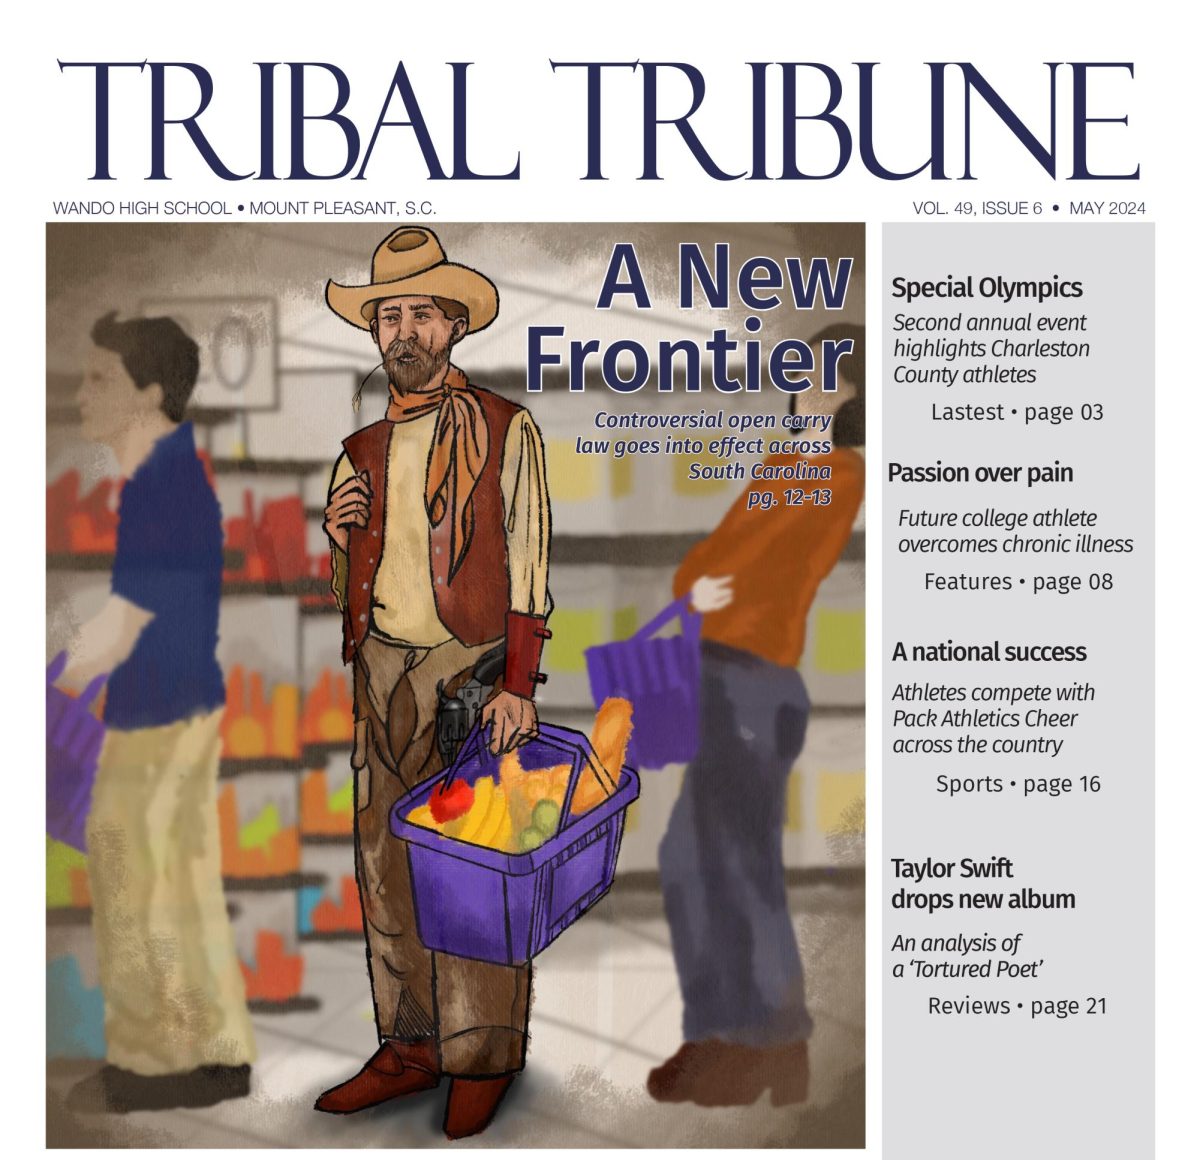 Tribal Tribune Volume 49 Issue 6